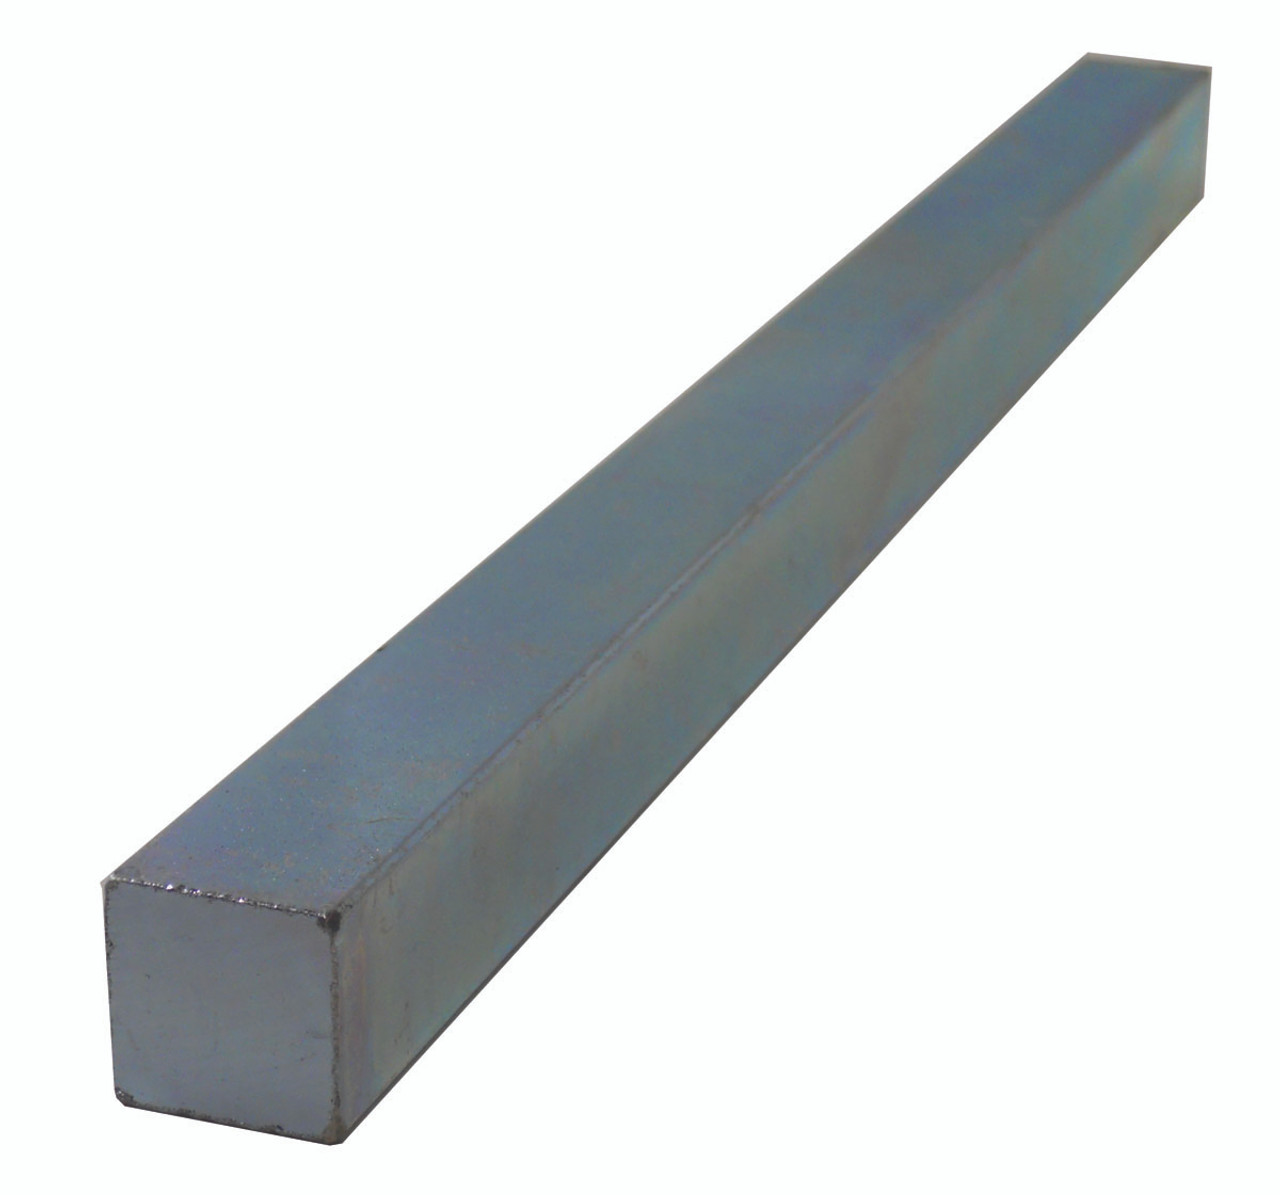 Square SAE 3/16 x 12" Zinc Plated Steel Keystock  .188-12